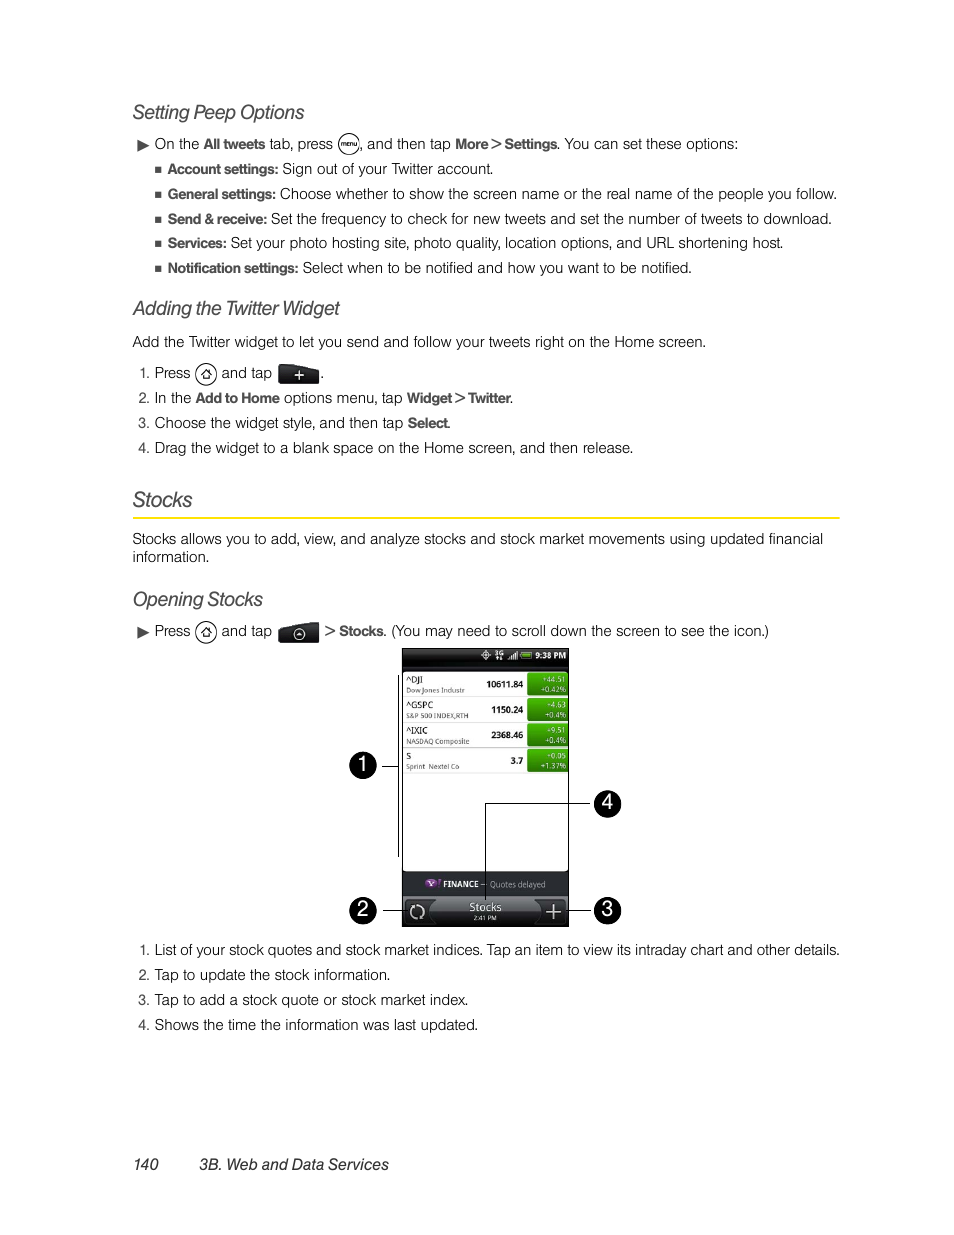 Setting peep options, Adding the twitter widget, Stocks | Opening stocks | HTC EVO 4G User Manual | Page 150 / 197